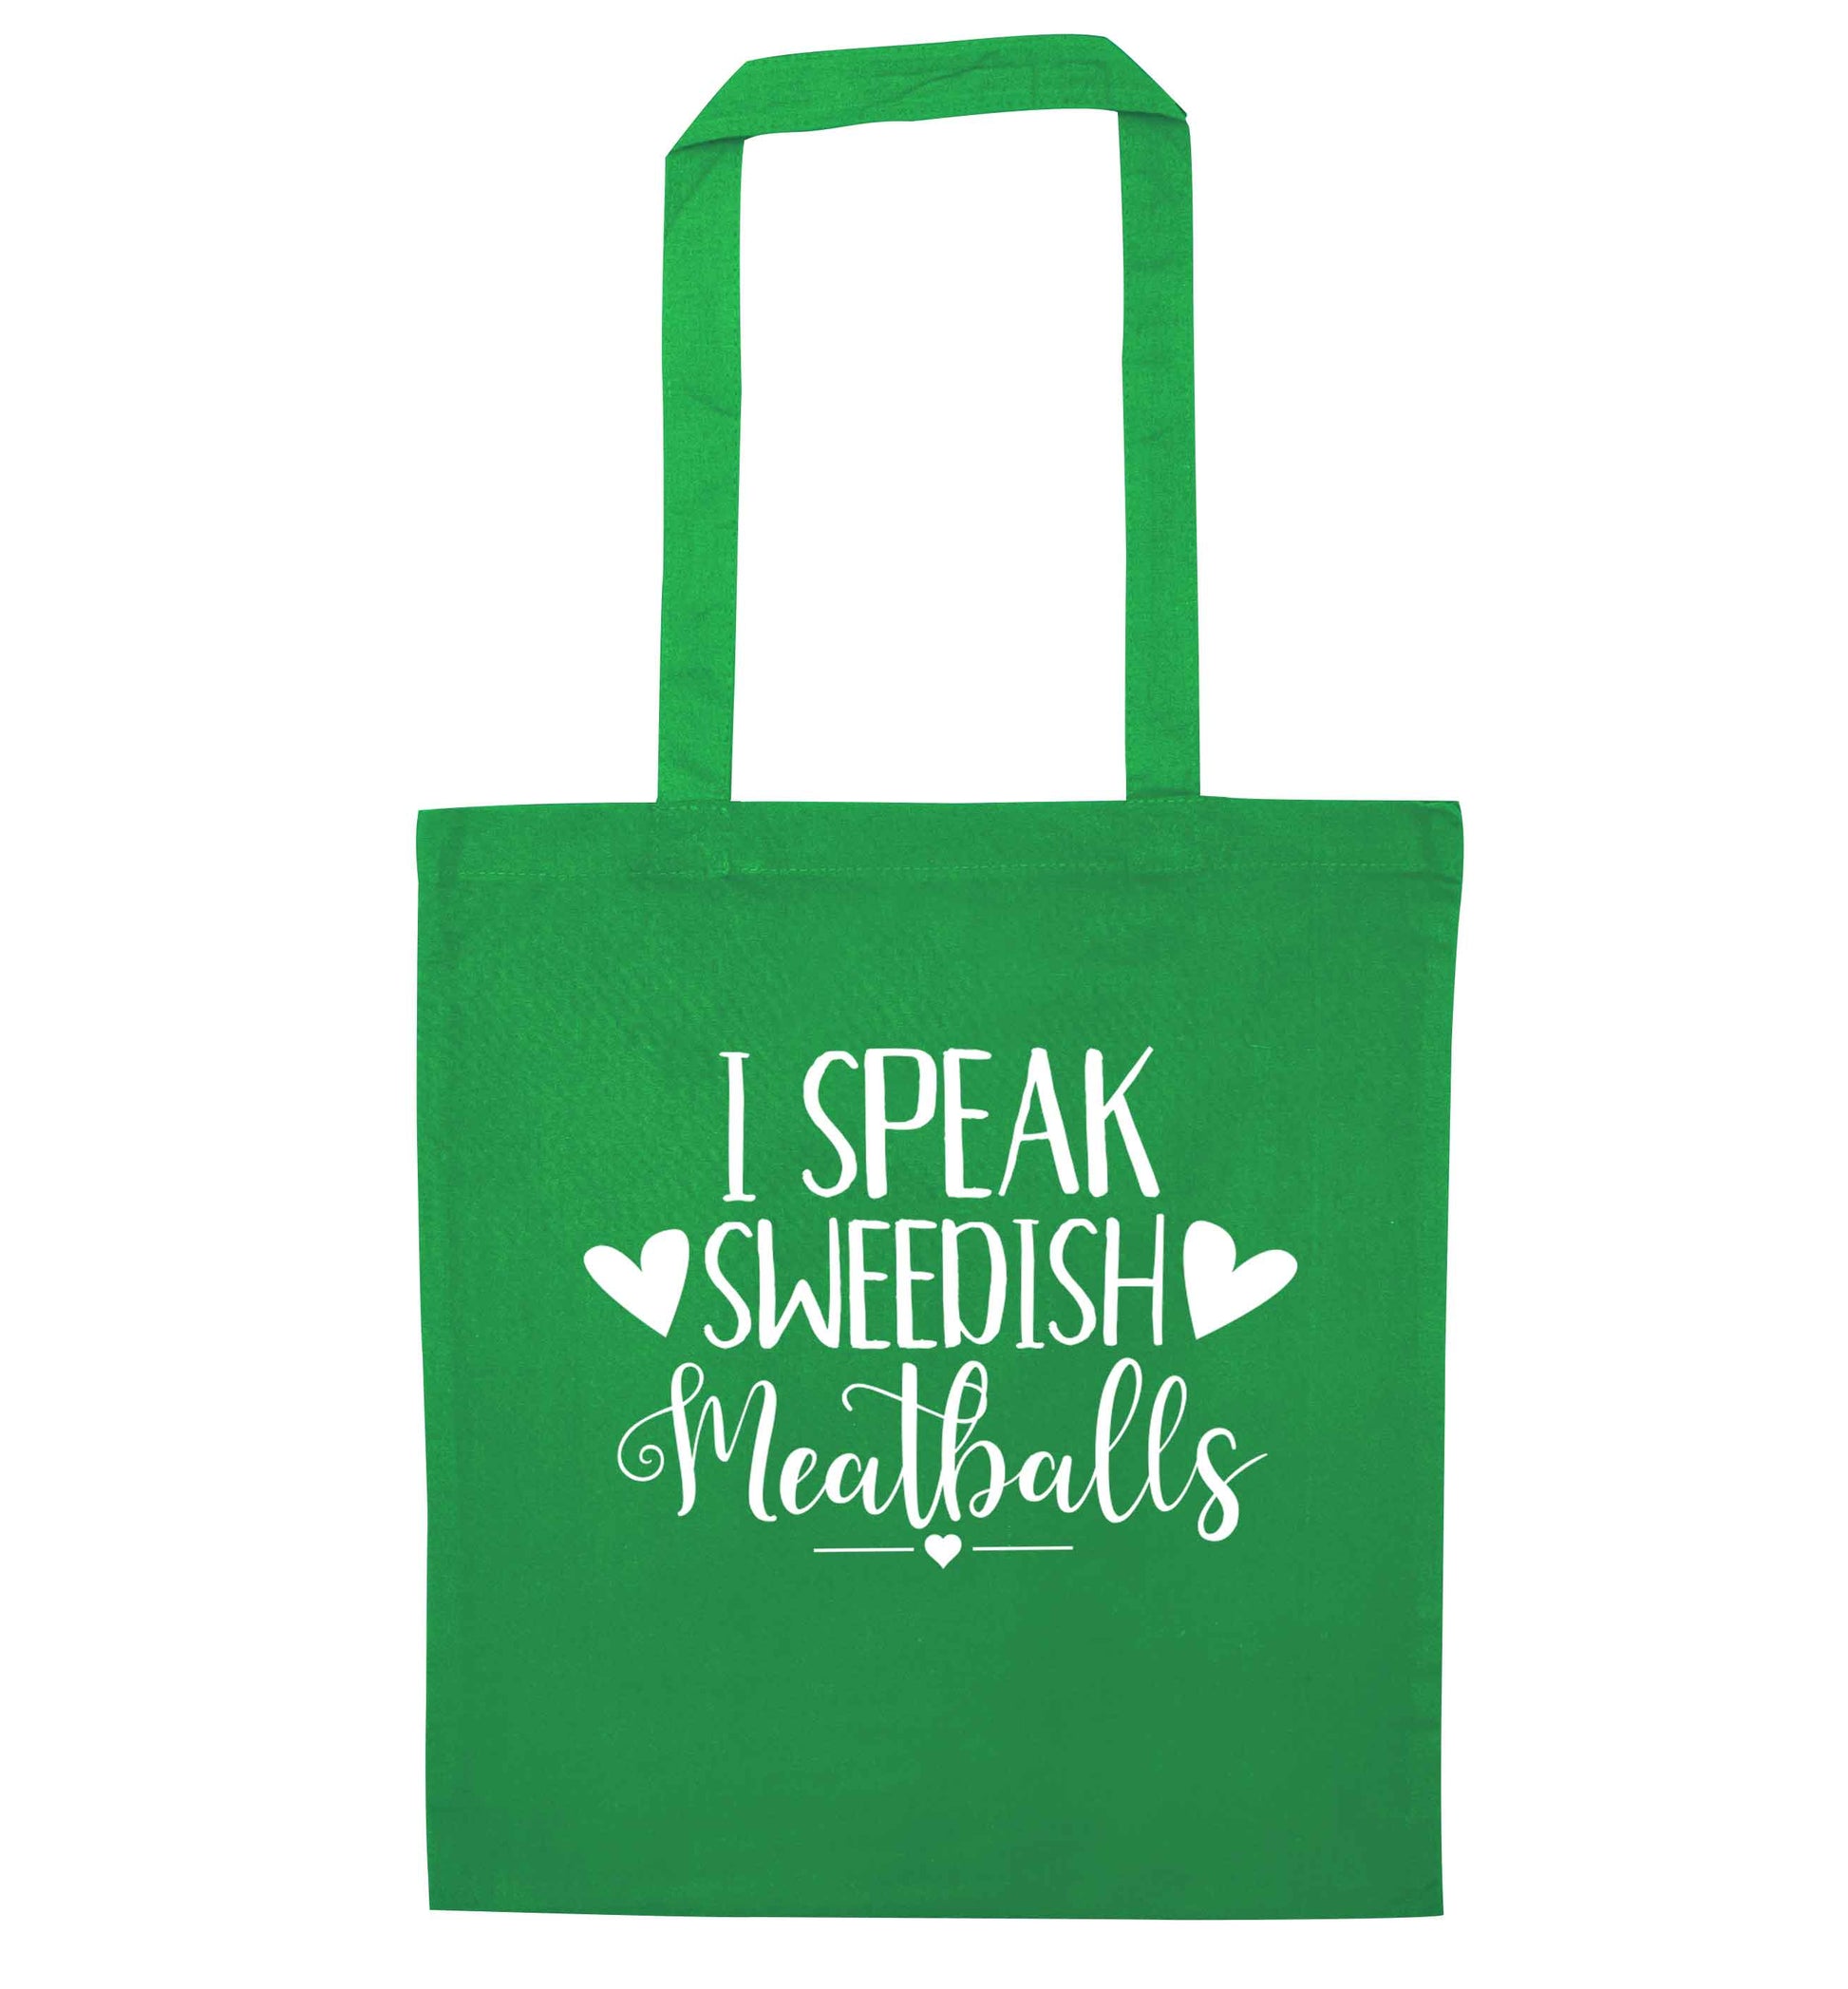 I speak sweedish...meatballs green tote bag